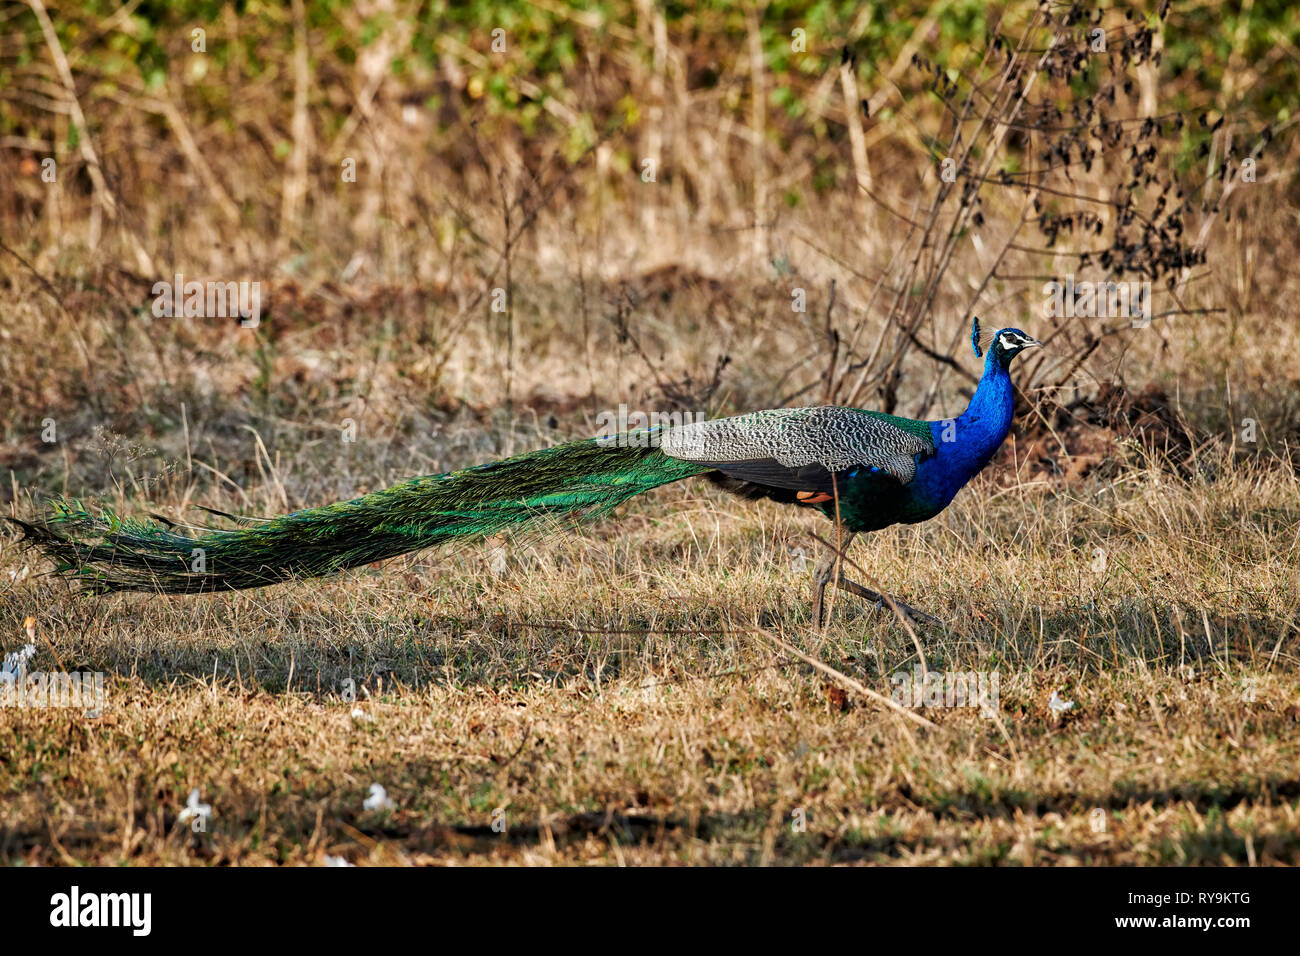 Common peacock, Indian peafowl or blue peafowl, Pavo cristatus, Bandipur Tiger Reserve, Karnataka, India Stock Photo